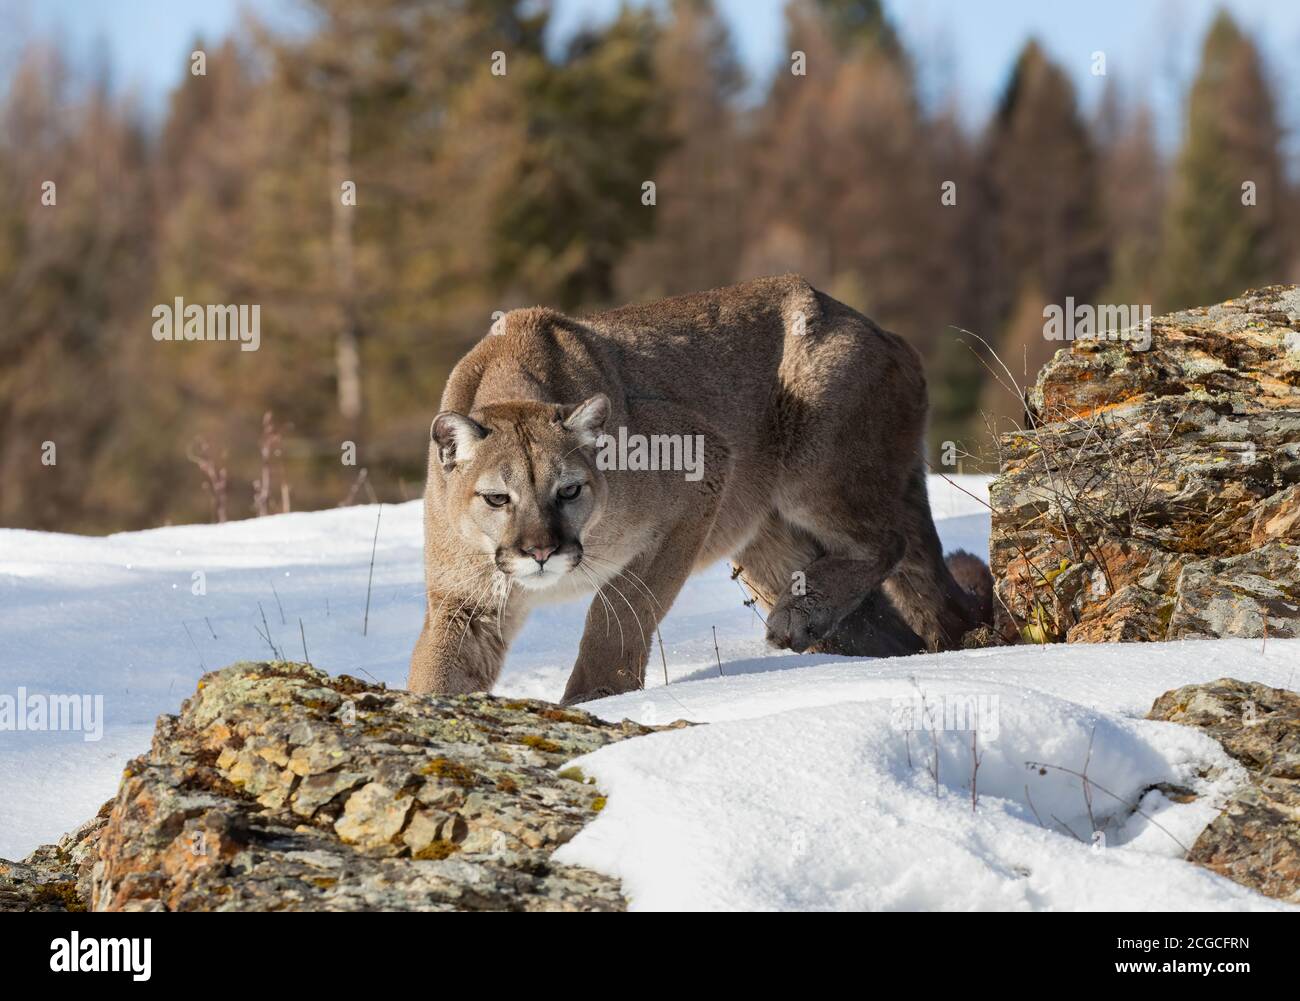 Cougar or Mountain lion (Puma concolor) walking through the mountains in the winter snow in Montana, USA Stock Photo